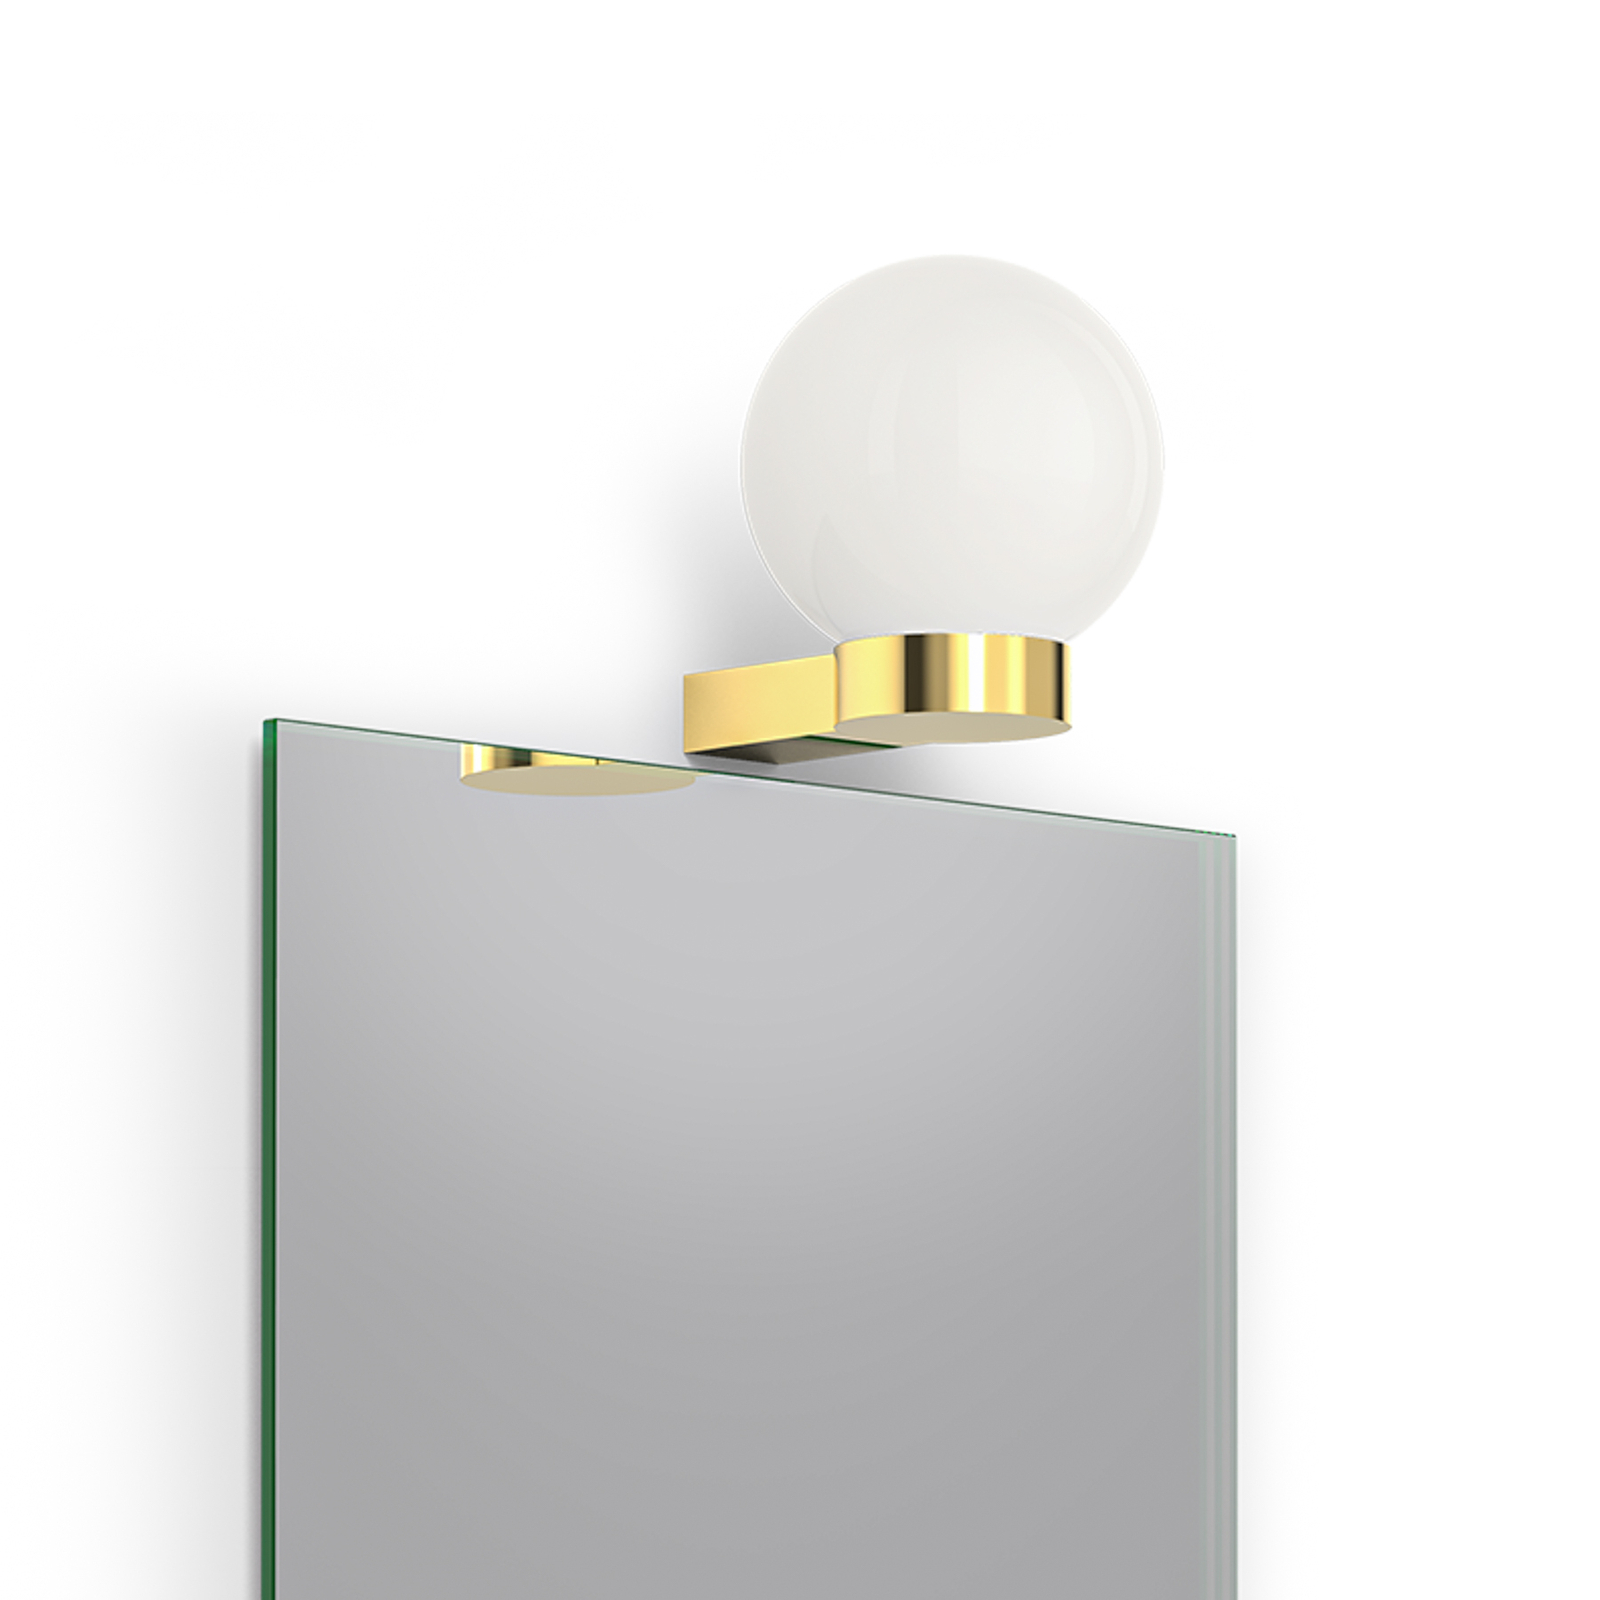 Decor Walther Bar Light wandlamp, goud glanzend